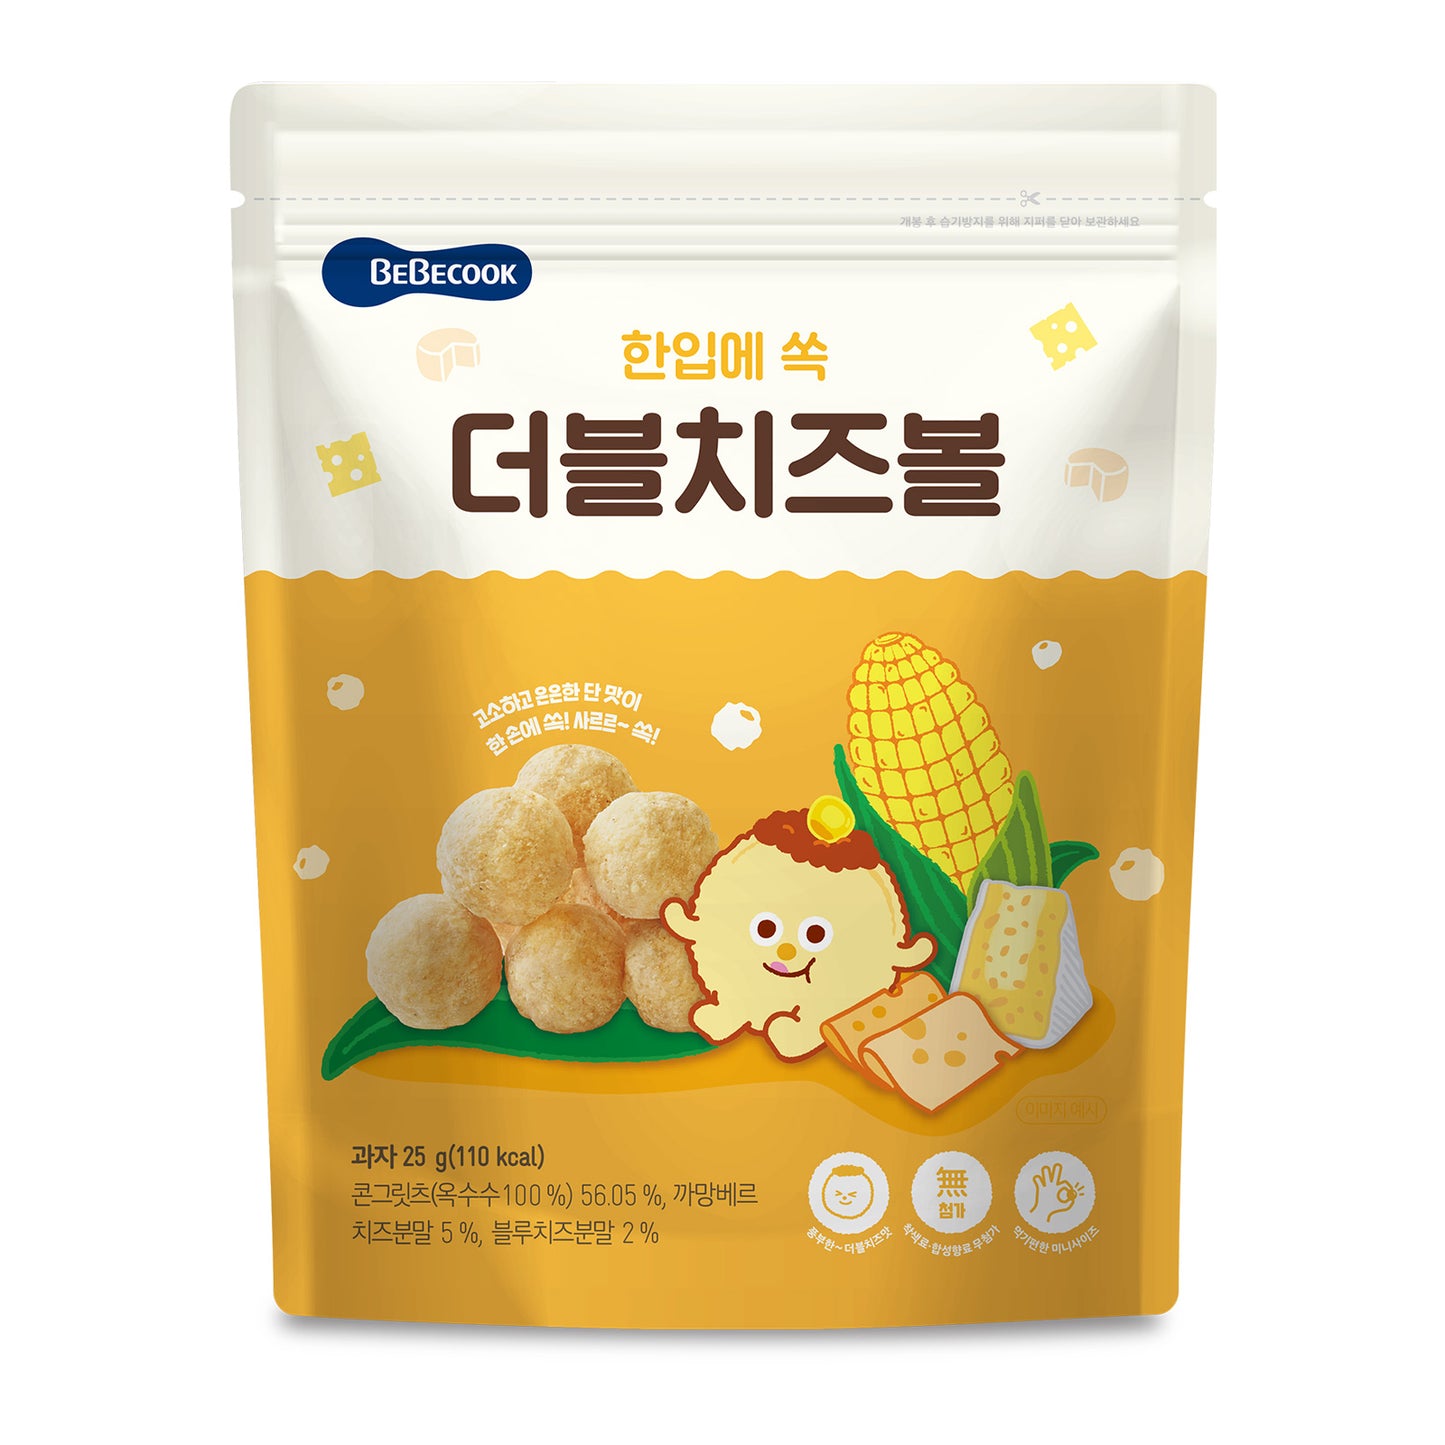 BeBecook - My First Yummy Corn Balls (Cheese) 25g